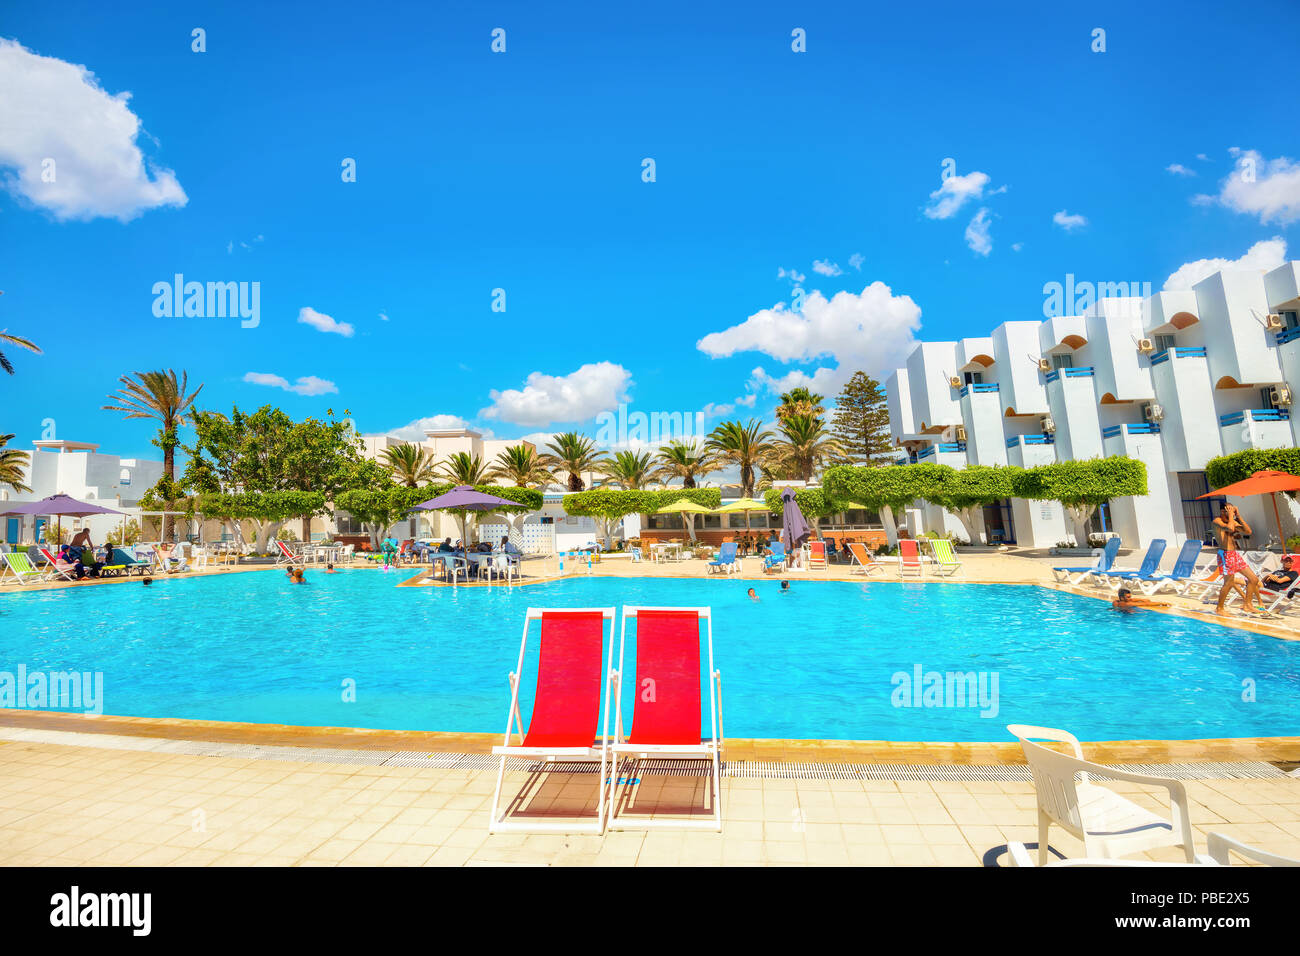 Courtyard with swimming pool of resort hotel on tunisian mediterranean seaside. Nabeul, Tunisia, North Africa Stock Photo